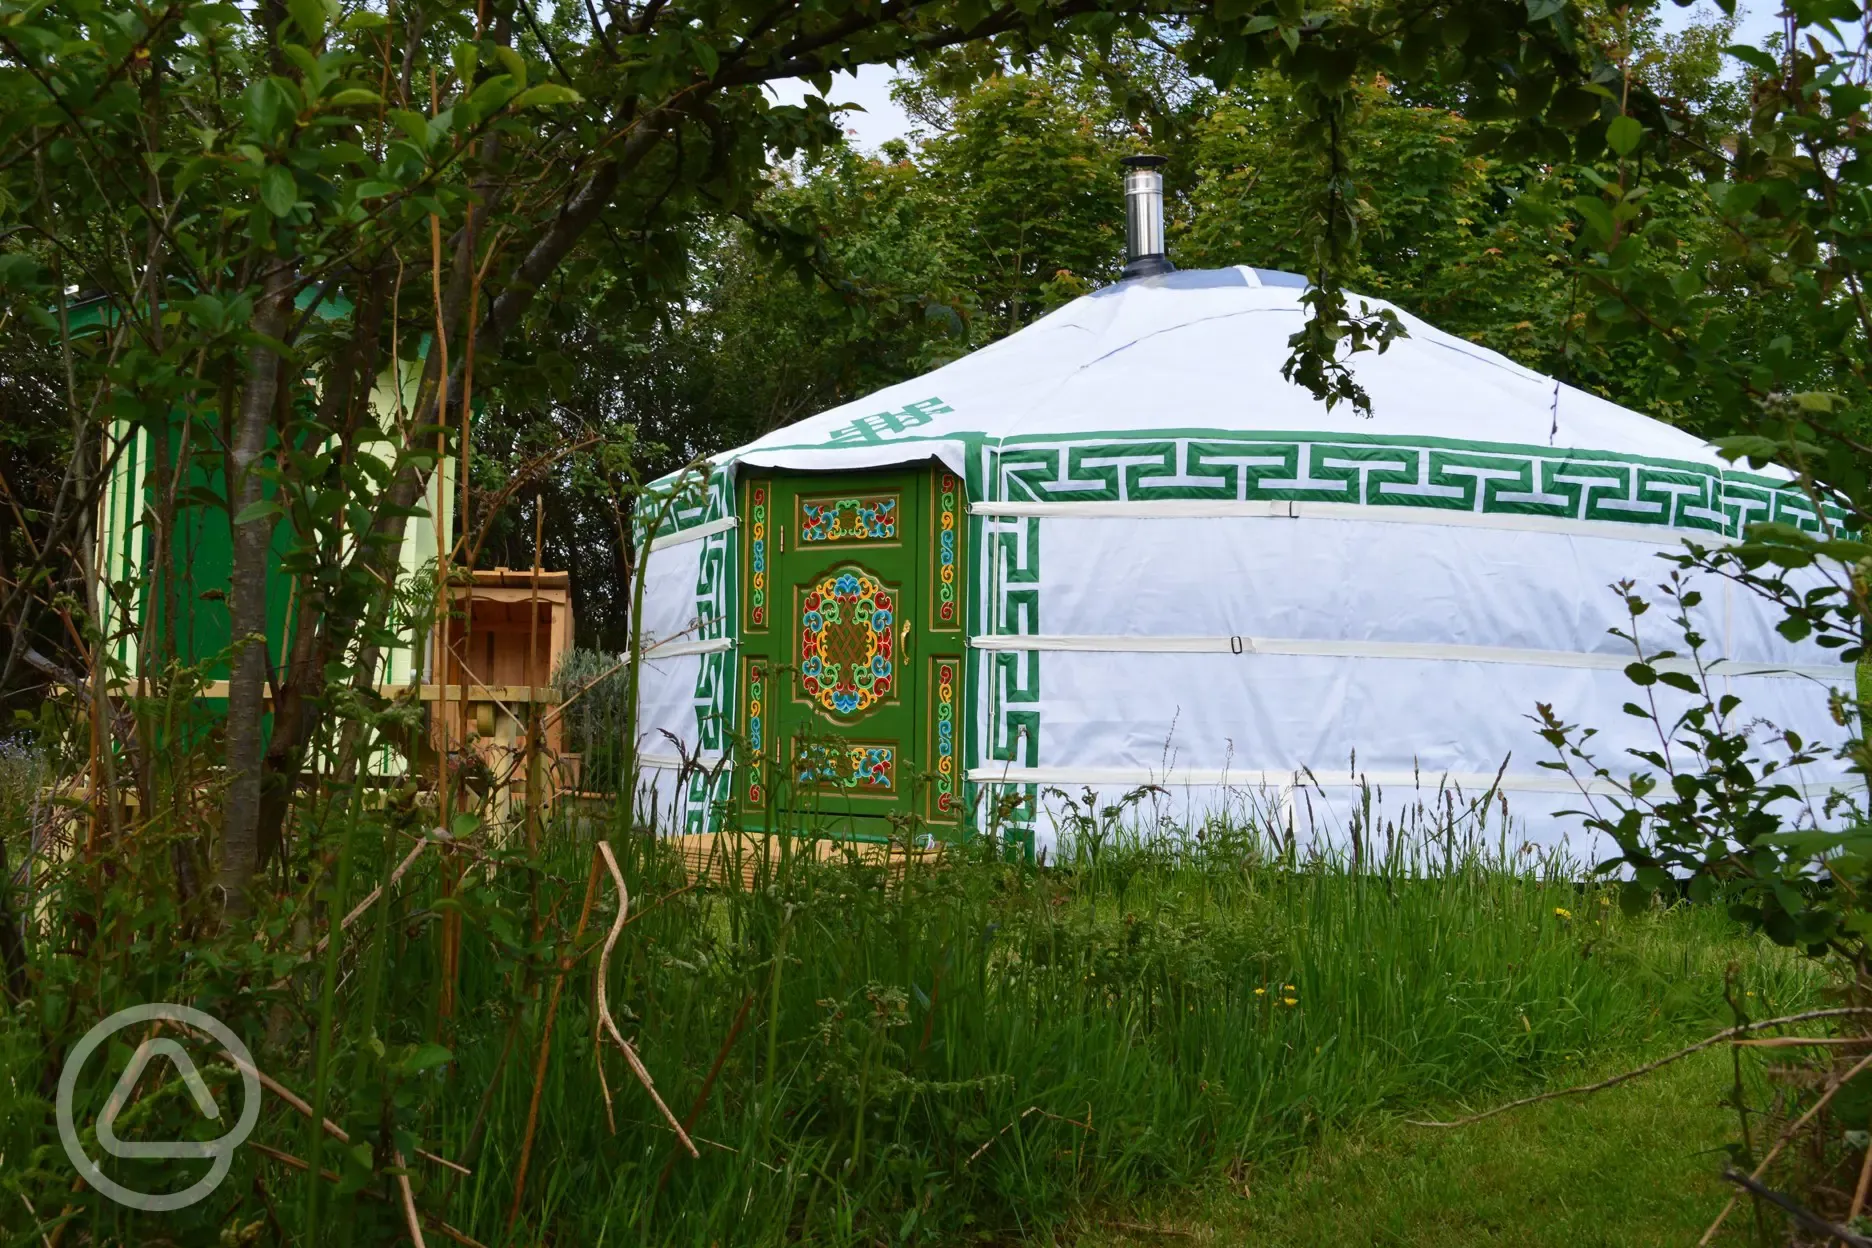 Mongolian Yurt